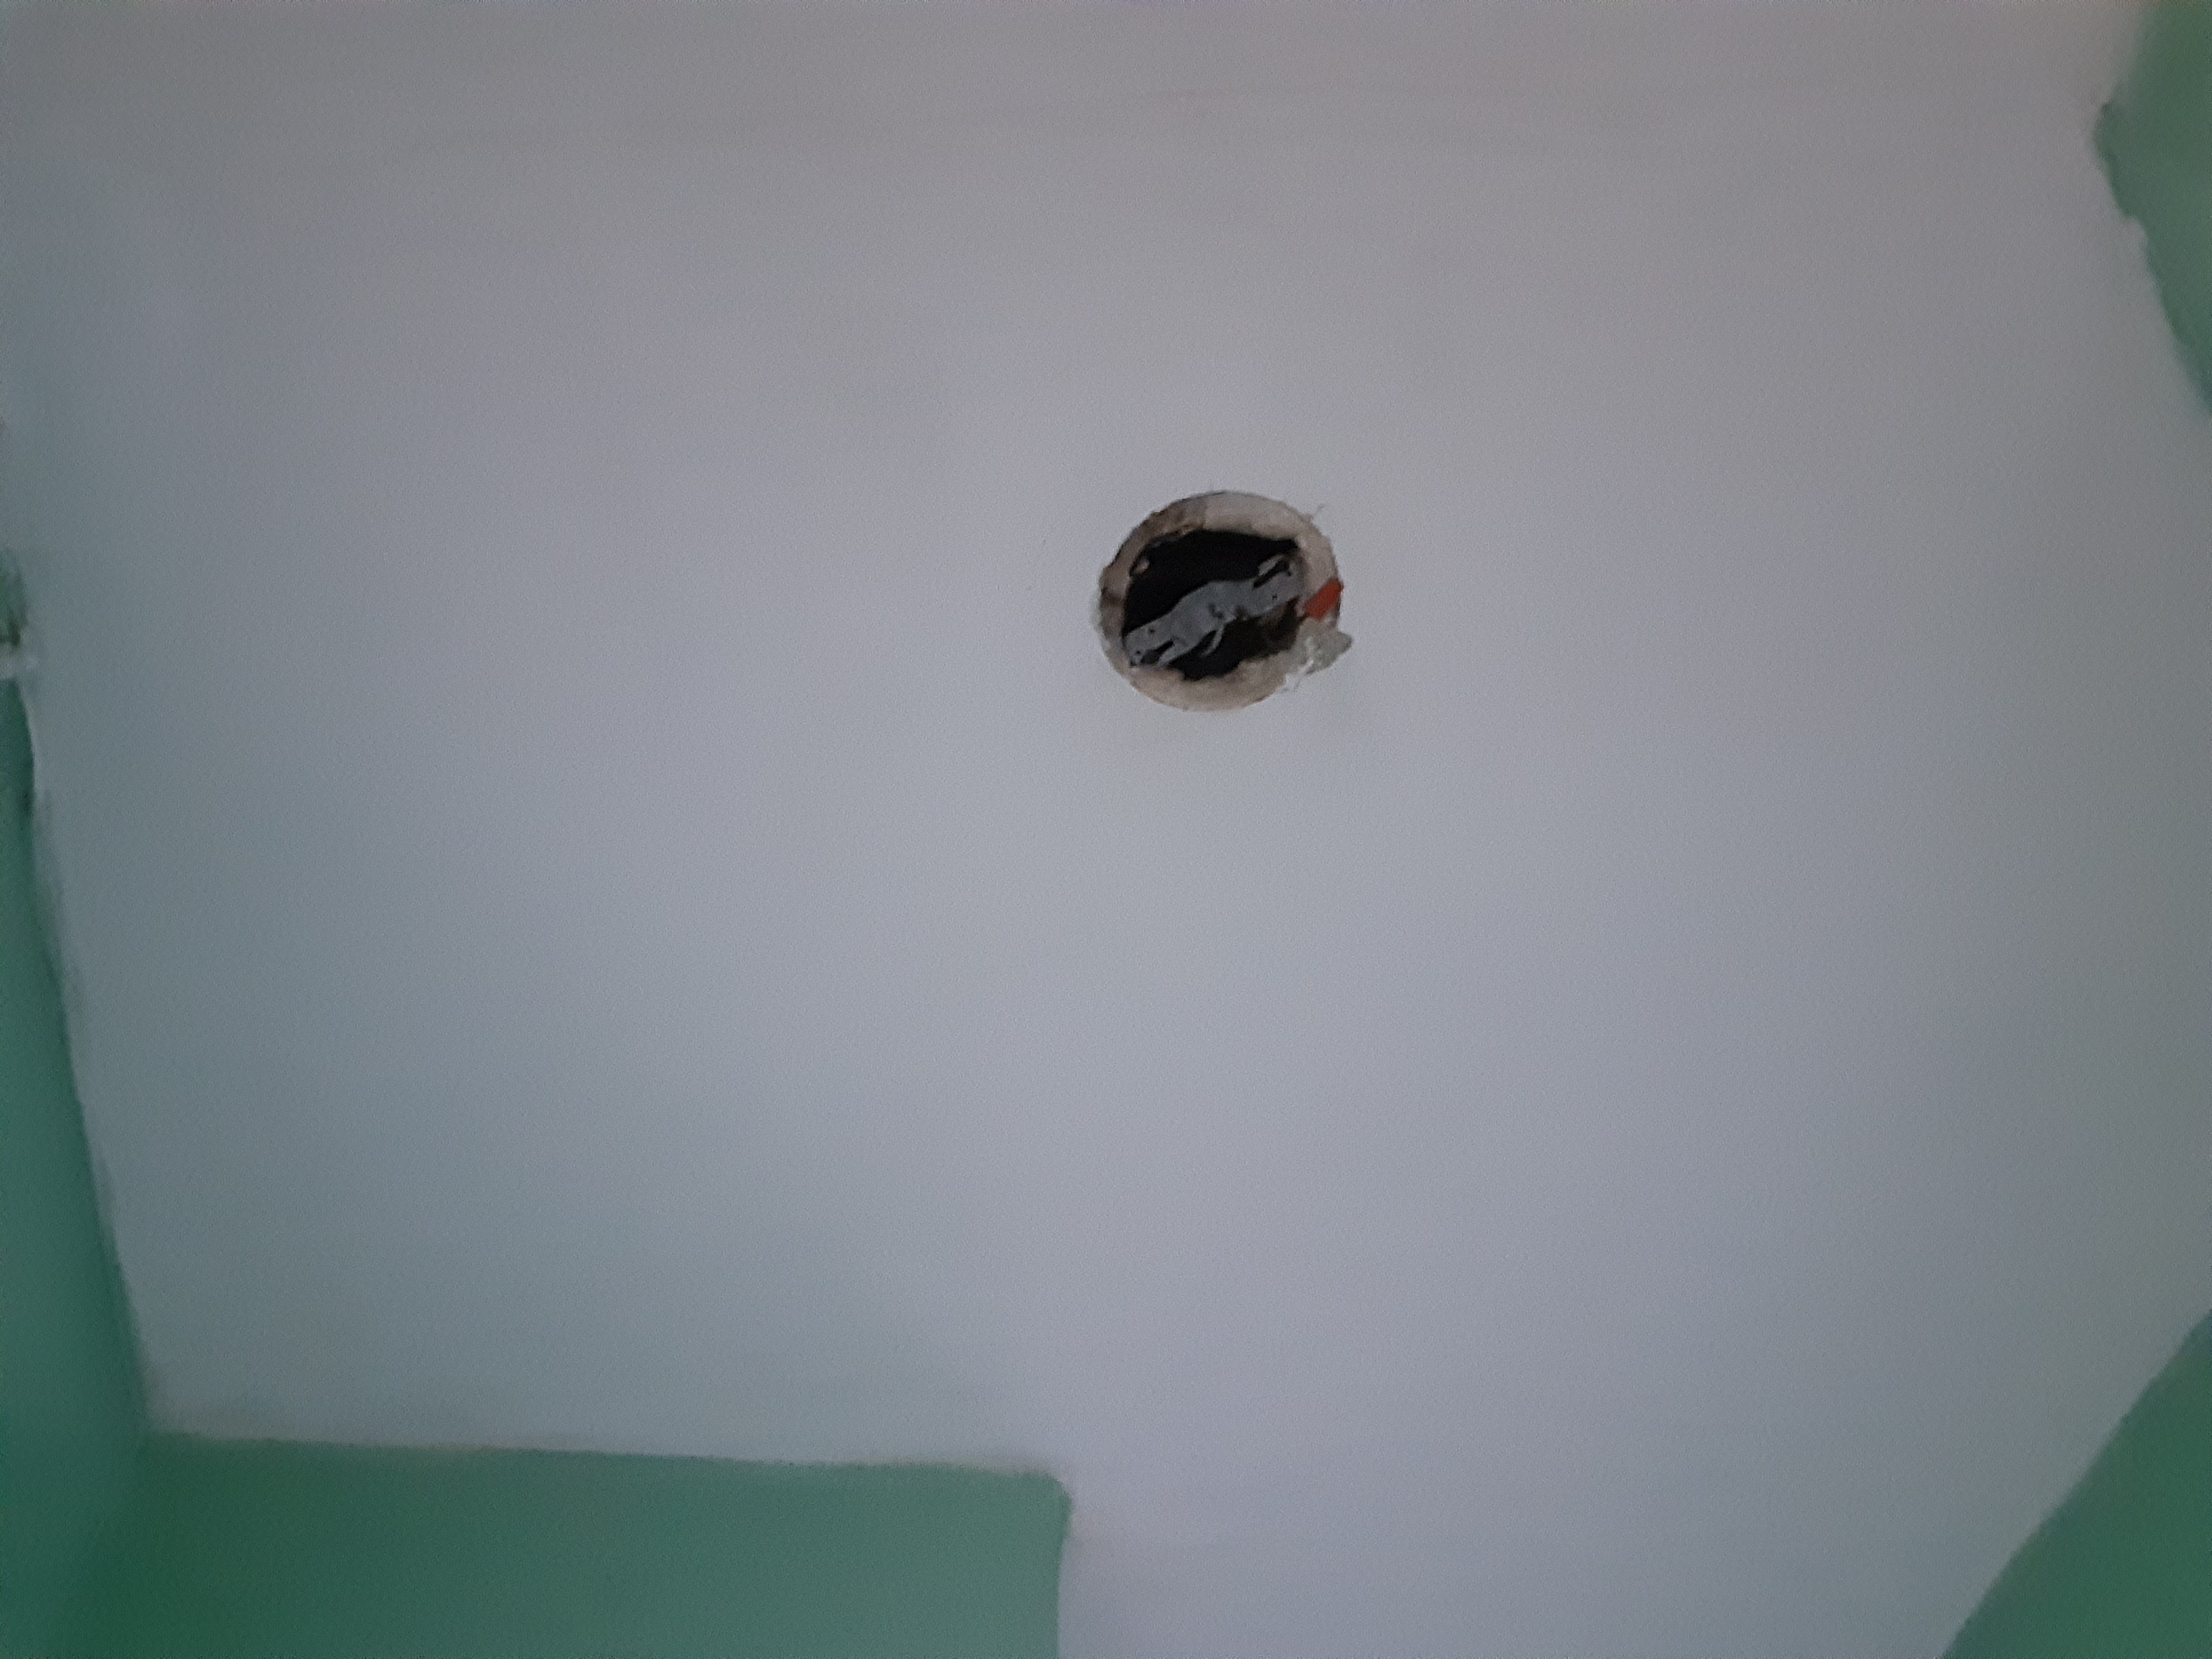 Holes in walls